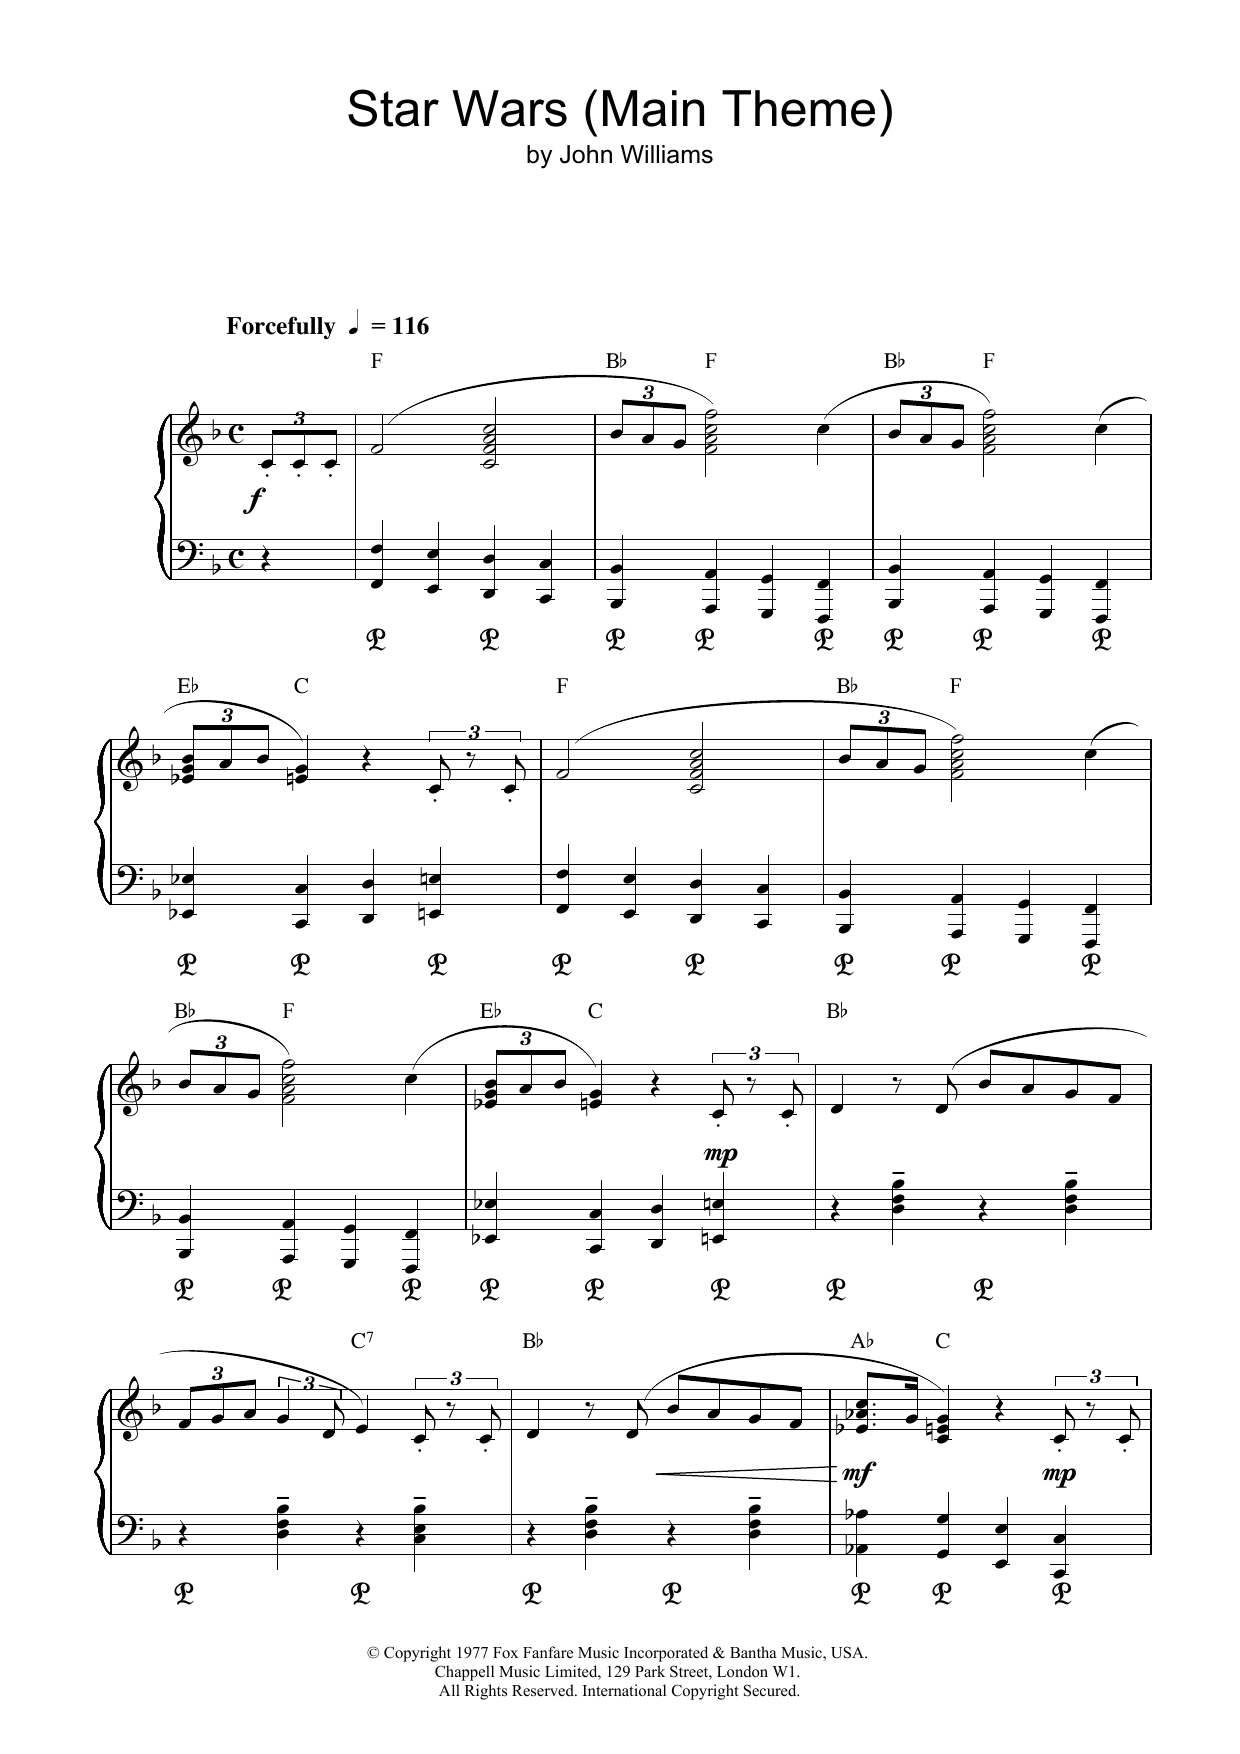 John Williams Star Wars (Main Theme) Sheet Music Notes & Chords for Piano (Big Notes) - Download or Print PDF